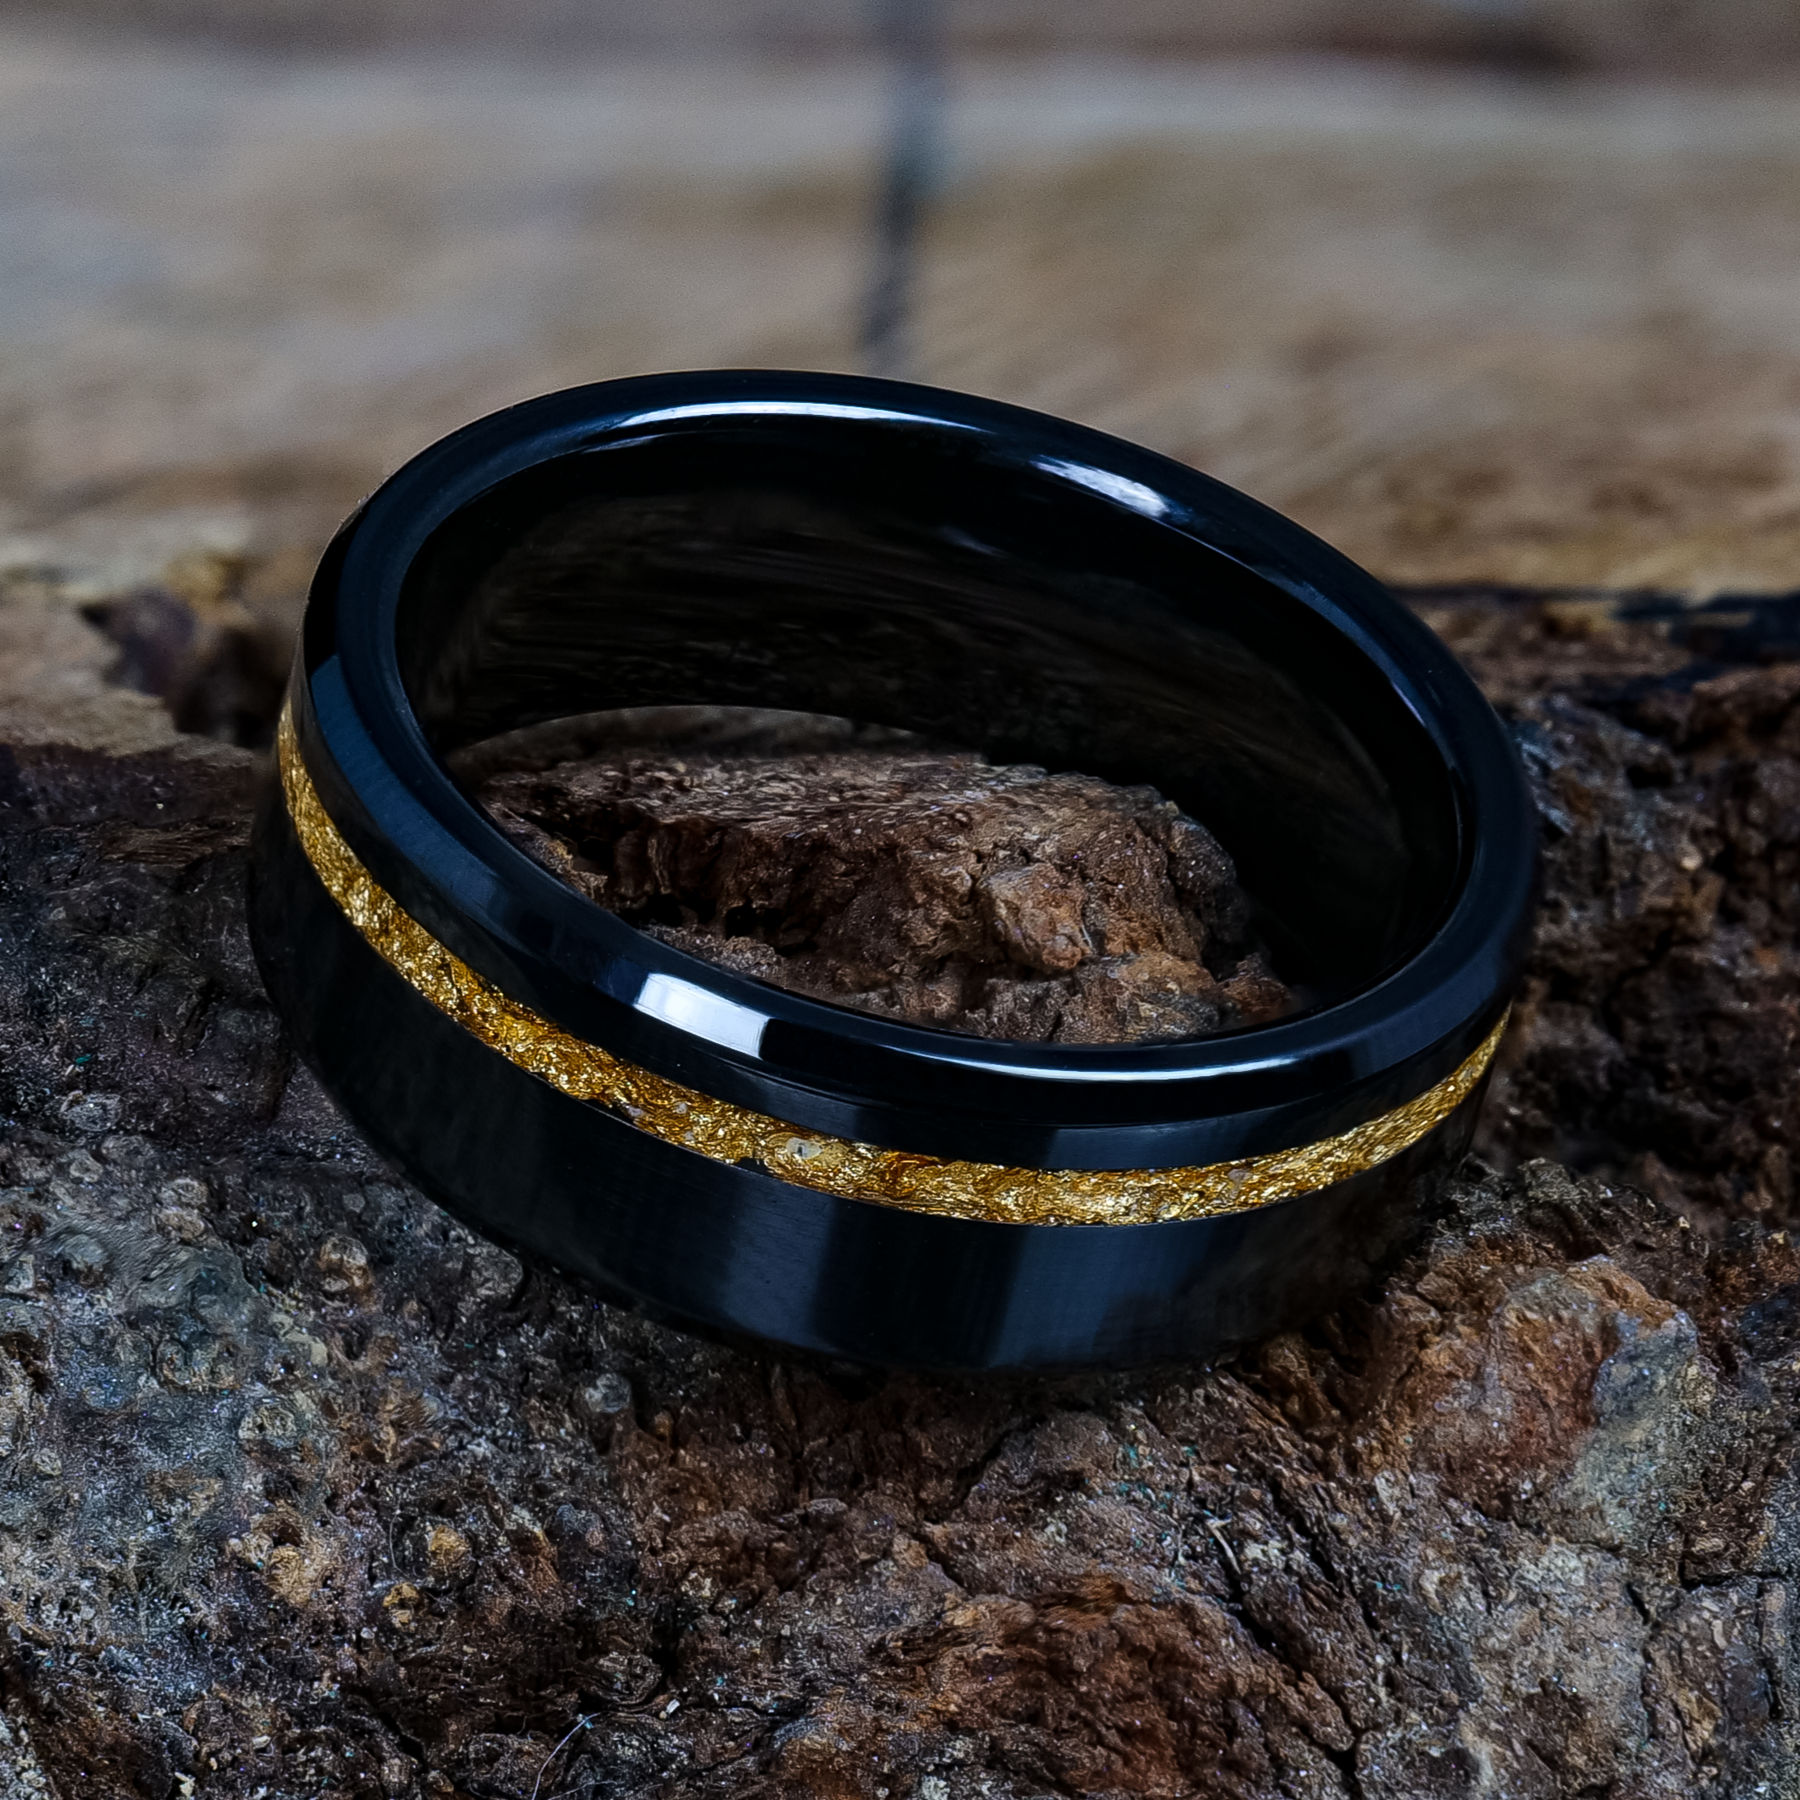 24K Gold Leaf Ring on Black Ceramic | Patrick Adair Designs